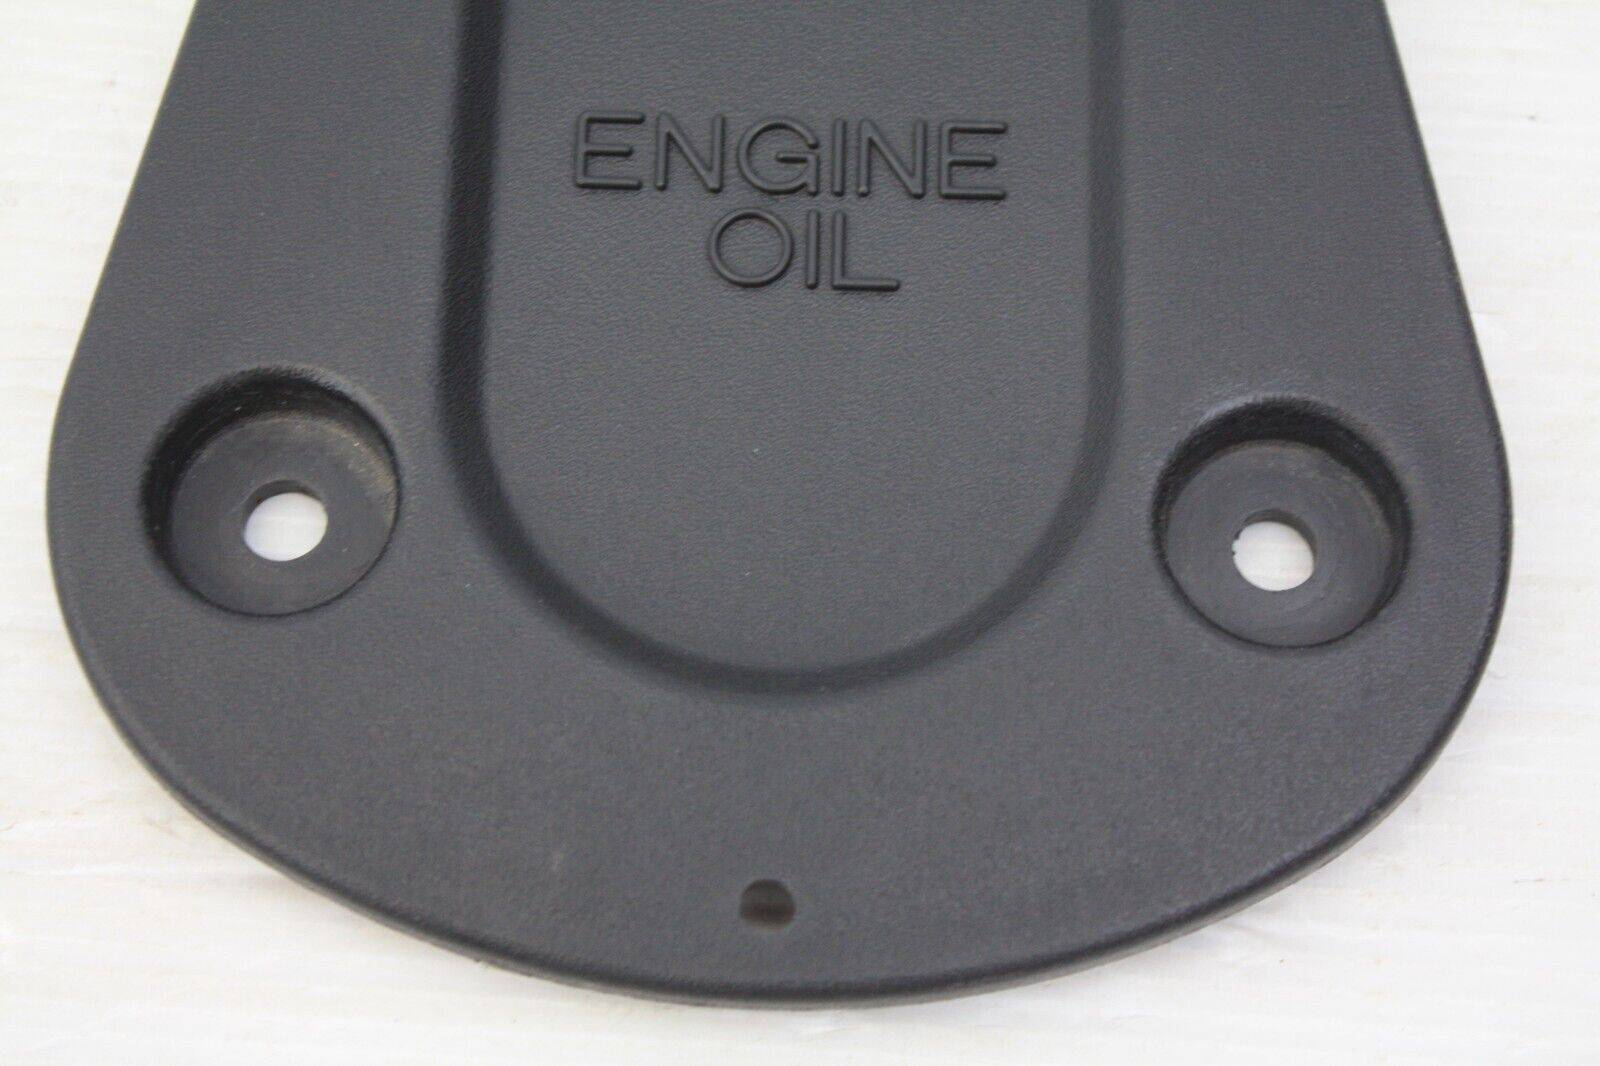 Kia-Niro-Engine-Oil-Cover-Cap-29131-G2000-Genuine-175827485059-3